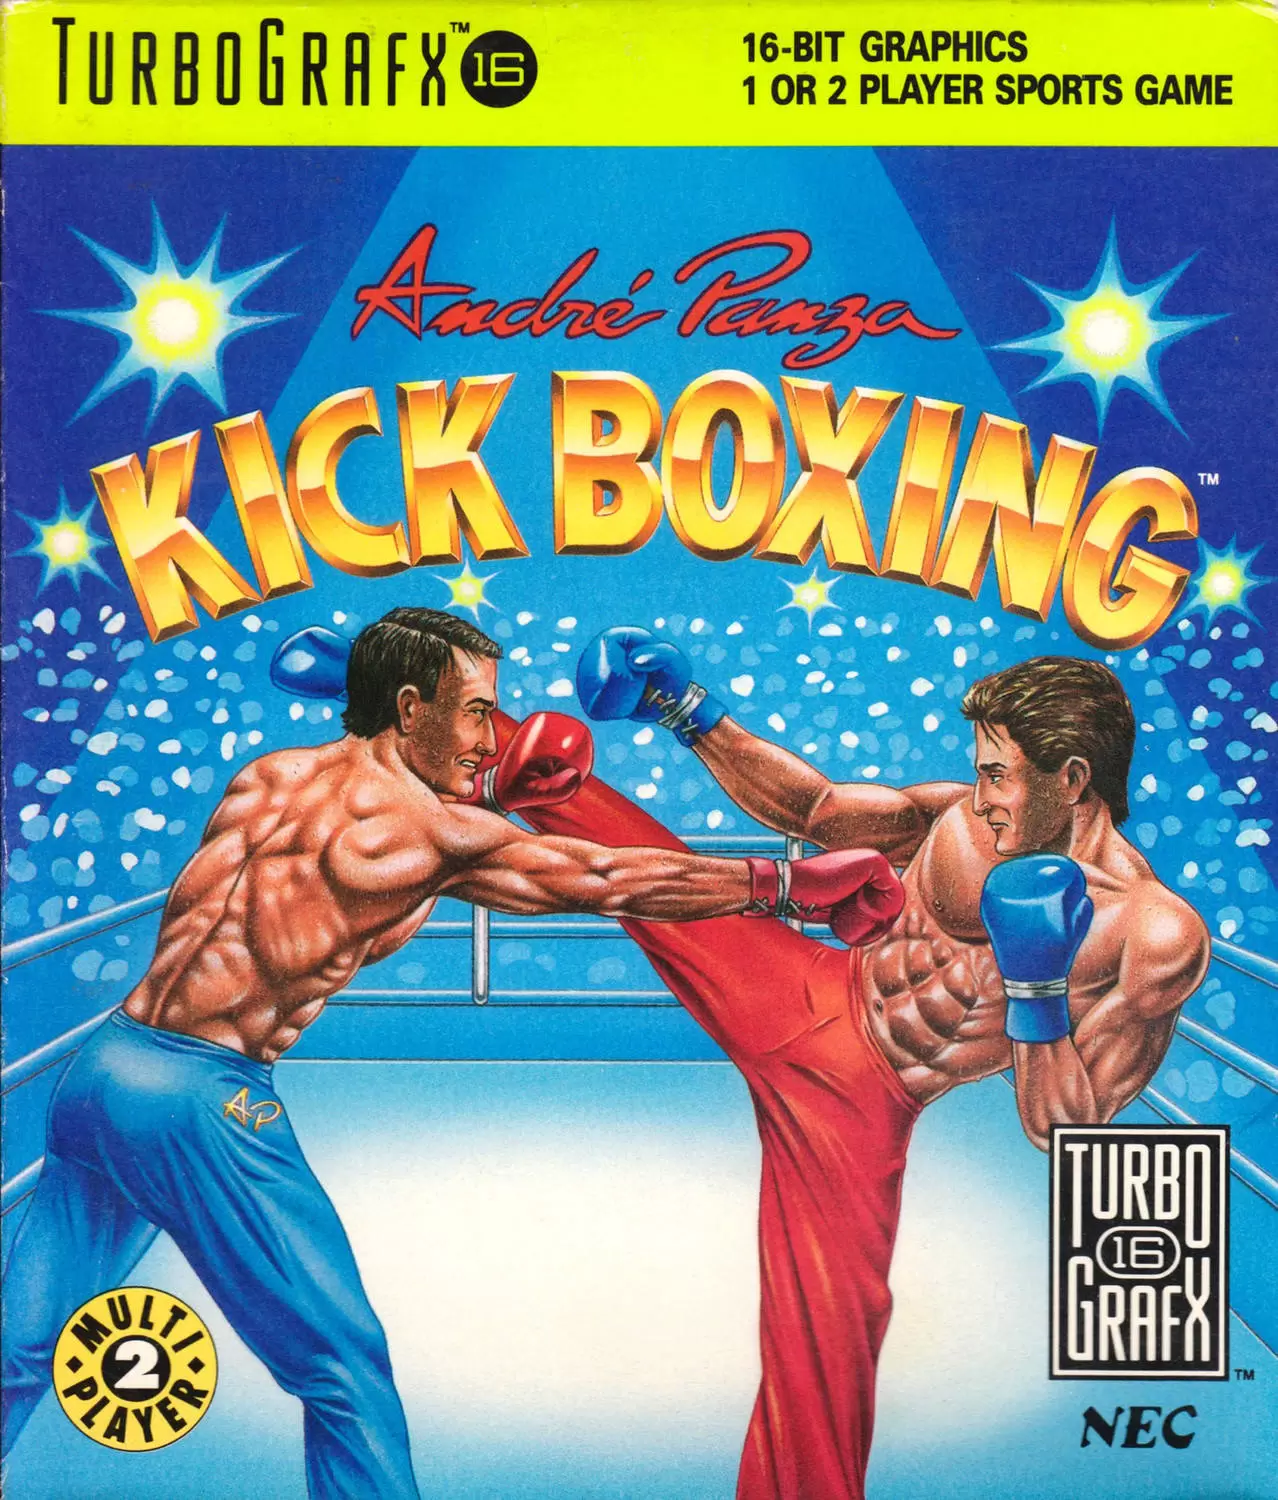 Turbo Grafx 16 (PC Engine) - Andre Panza Kick Boxing